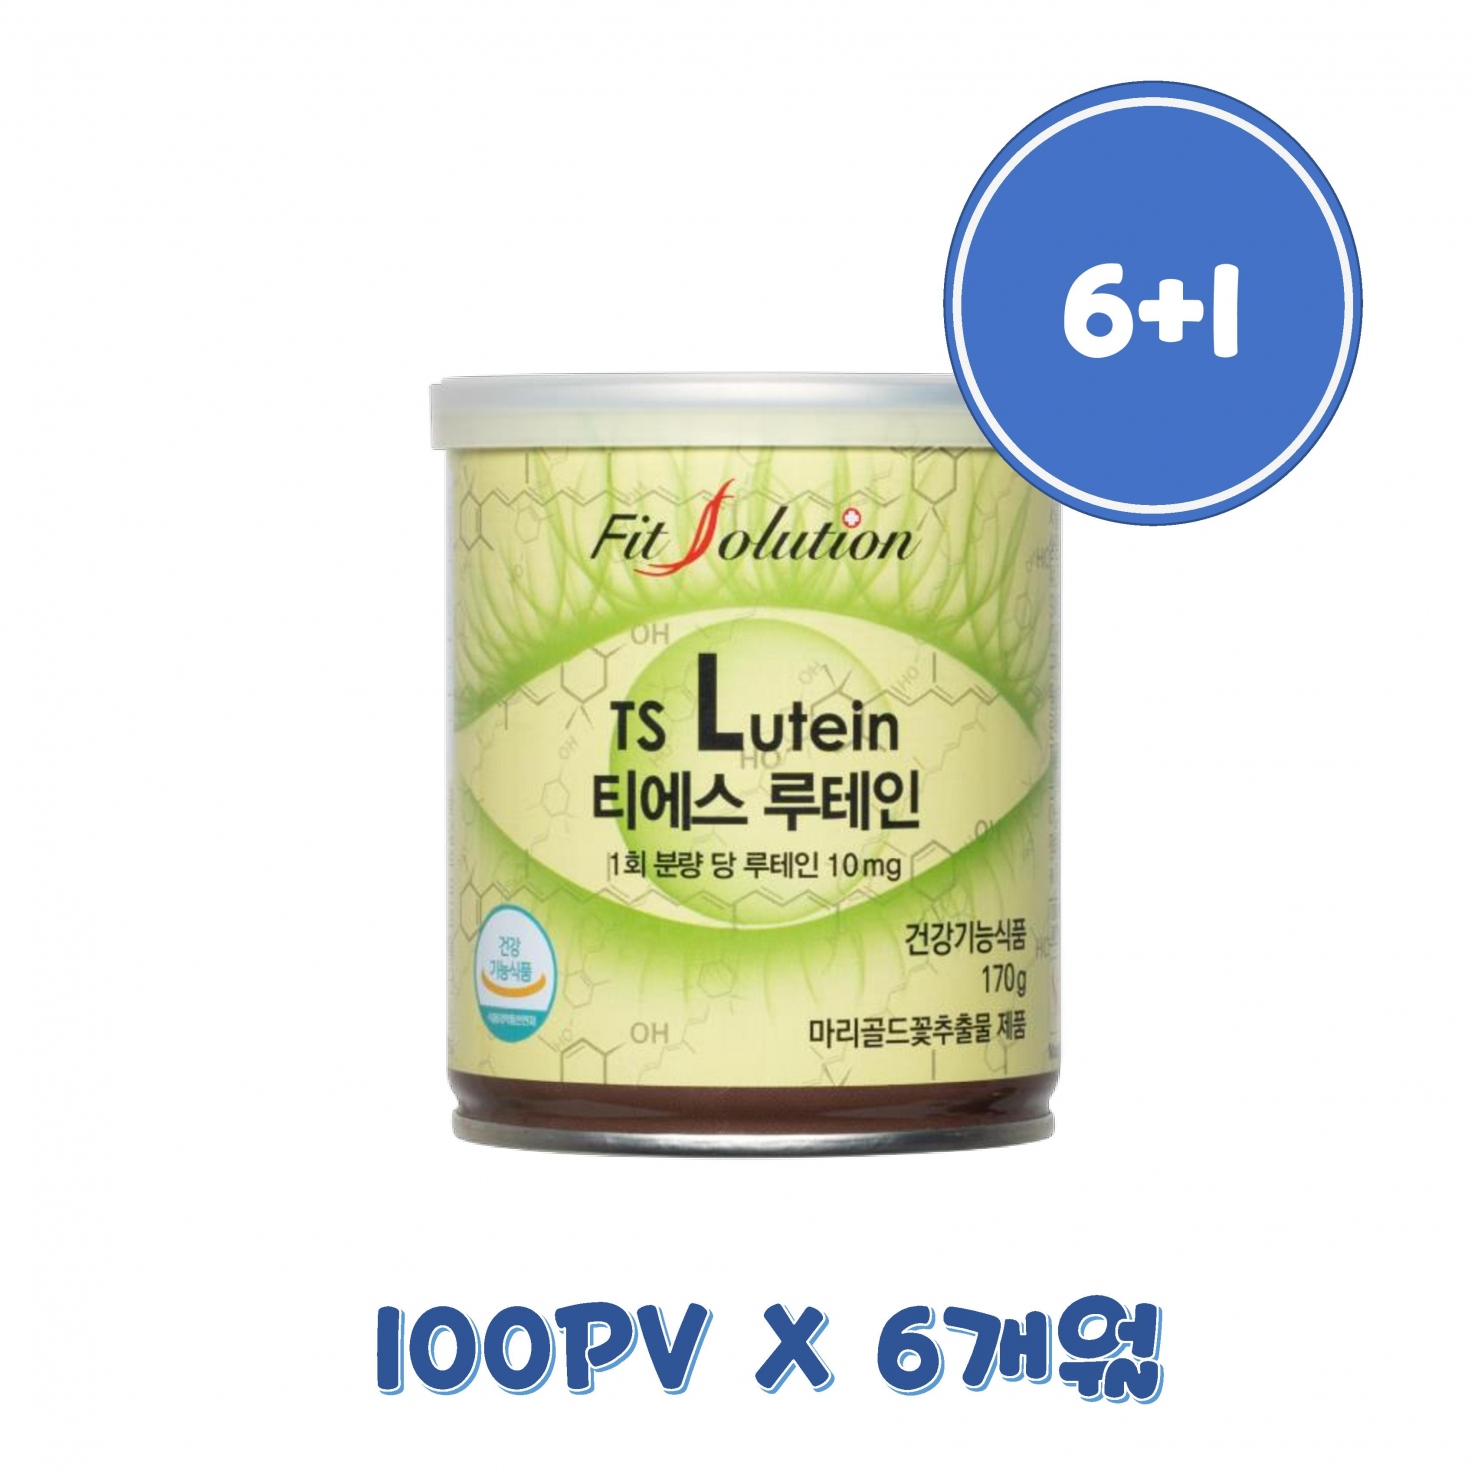 TS Lutein 티에스 루테인(170g) 6+1, 100PV * 6개월